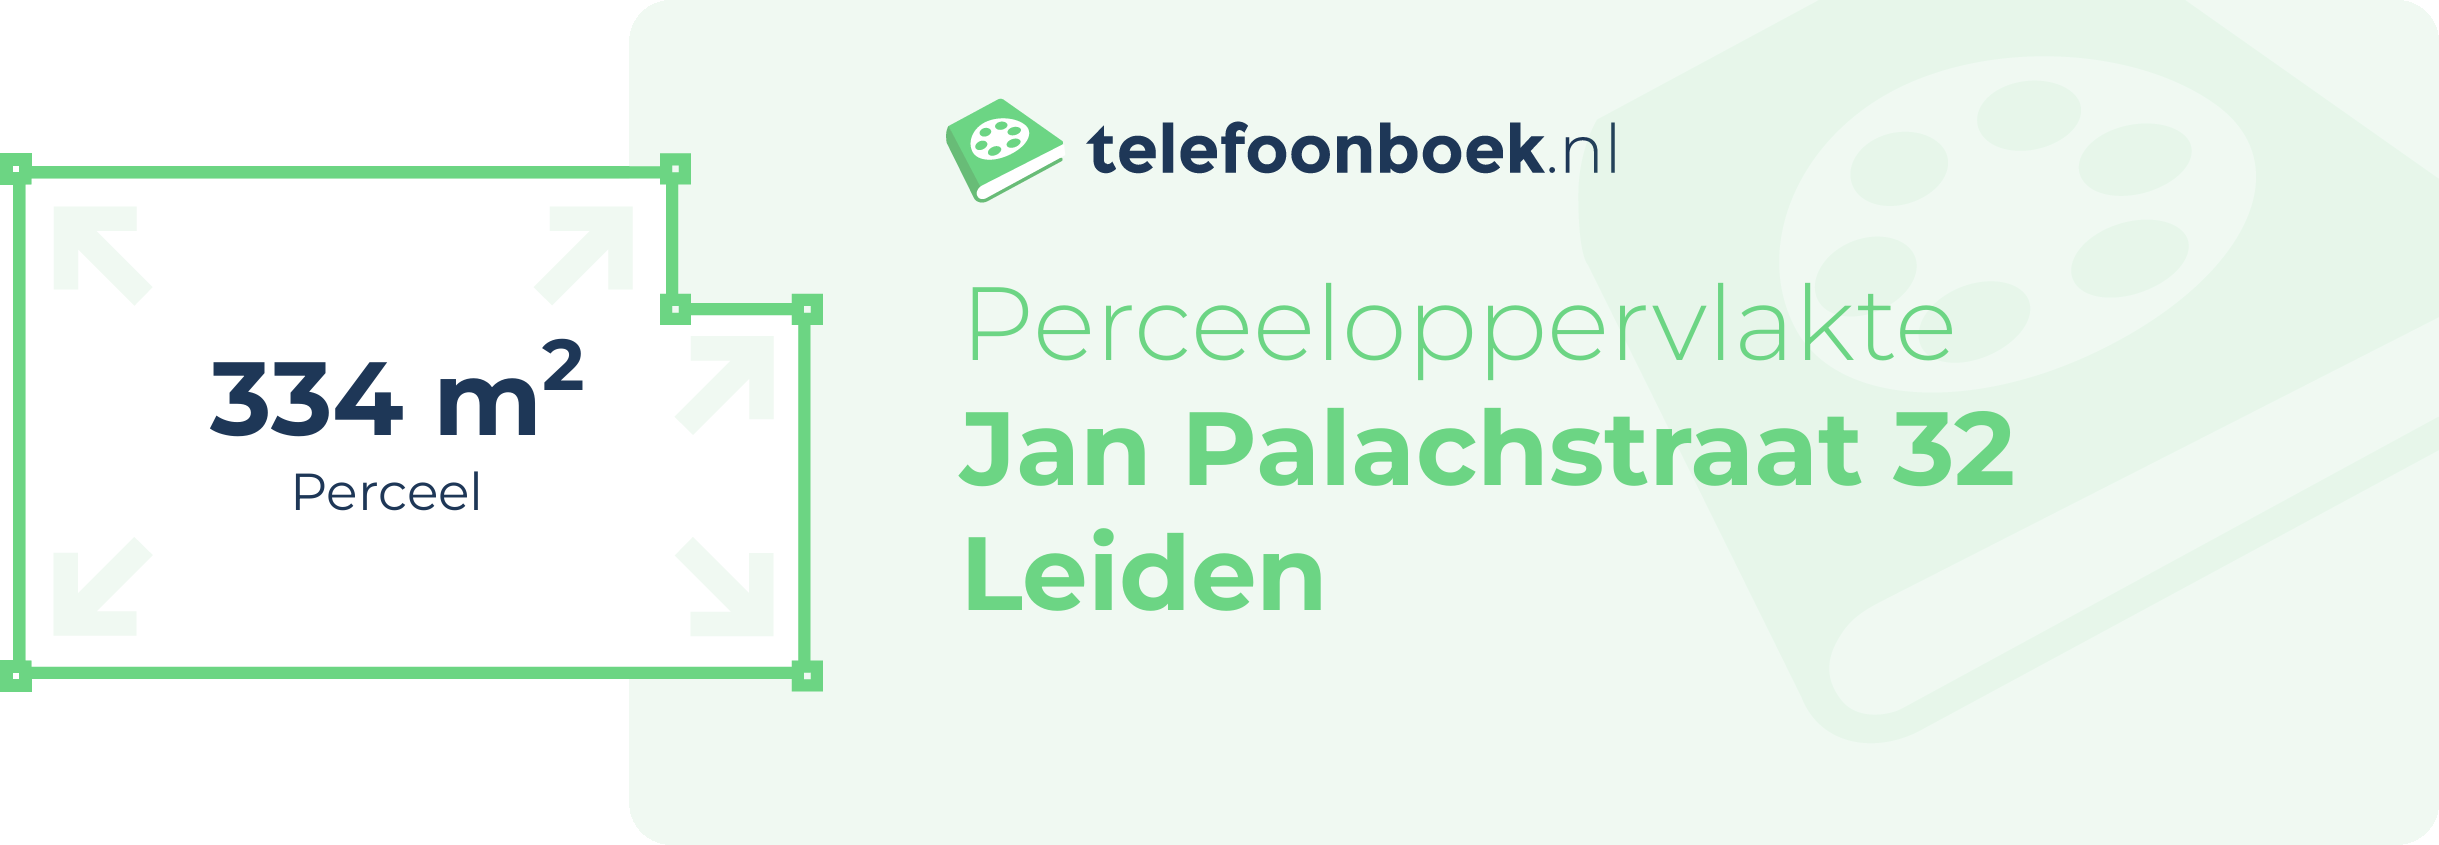 Perceeloppervlakte Jan Palachstraat 32 Leiden